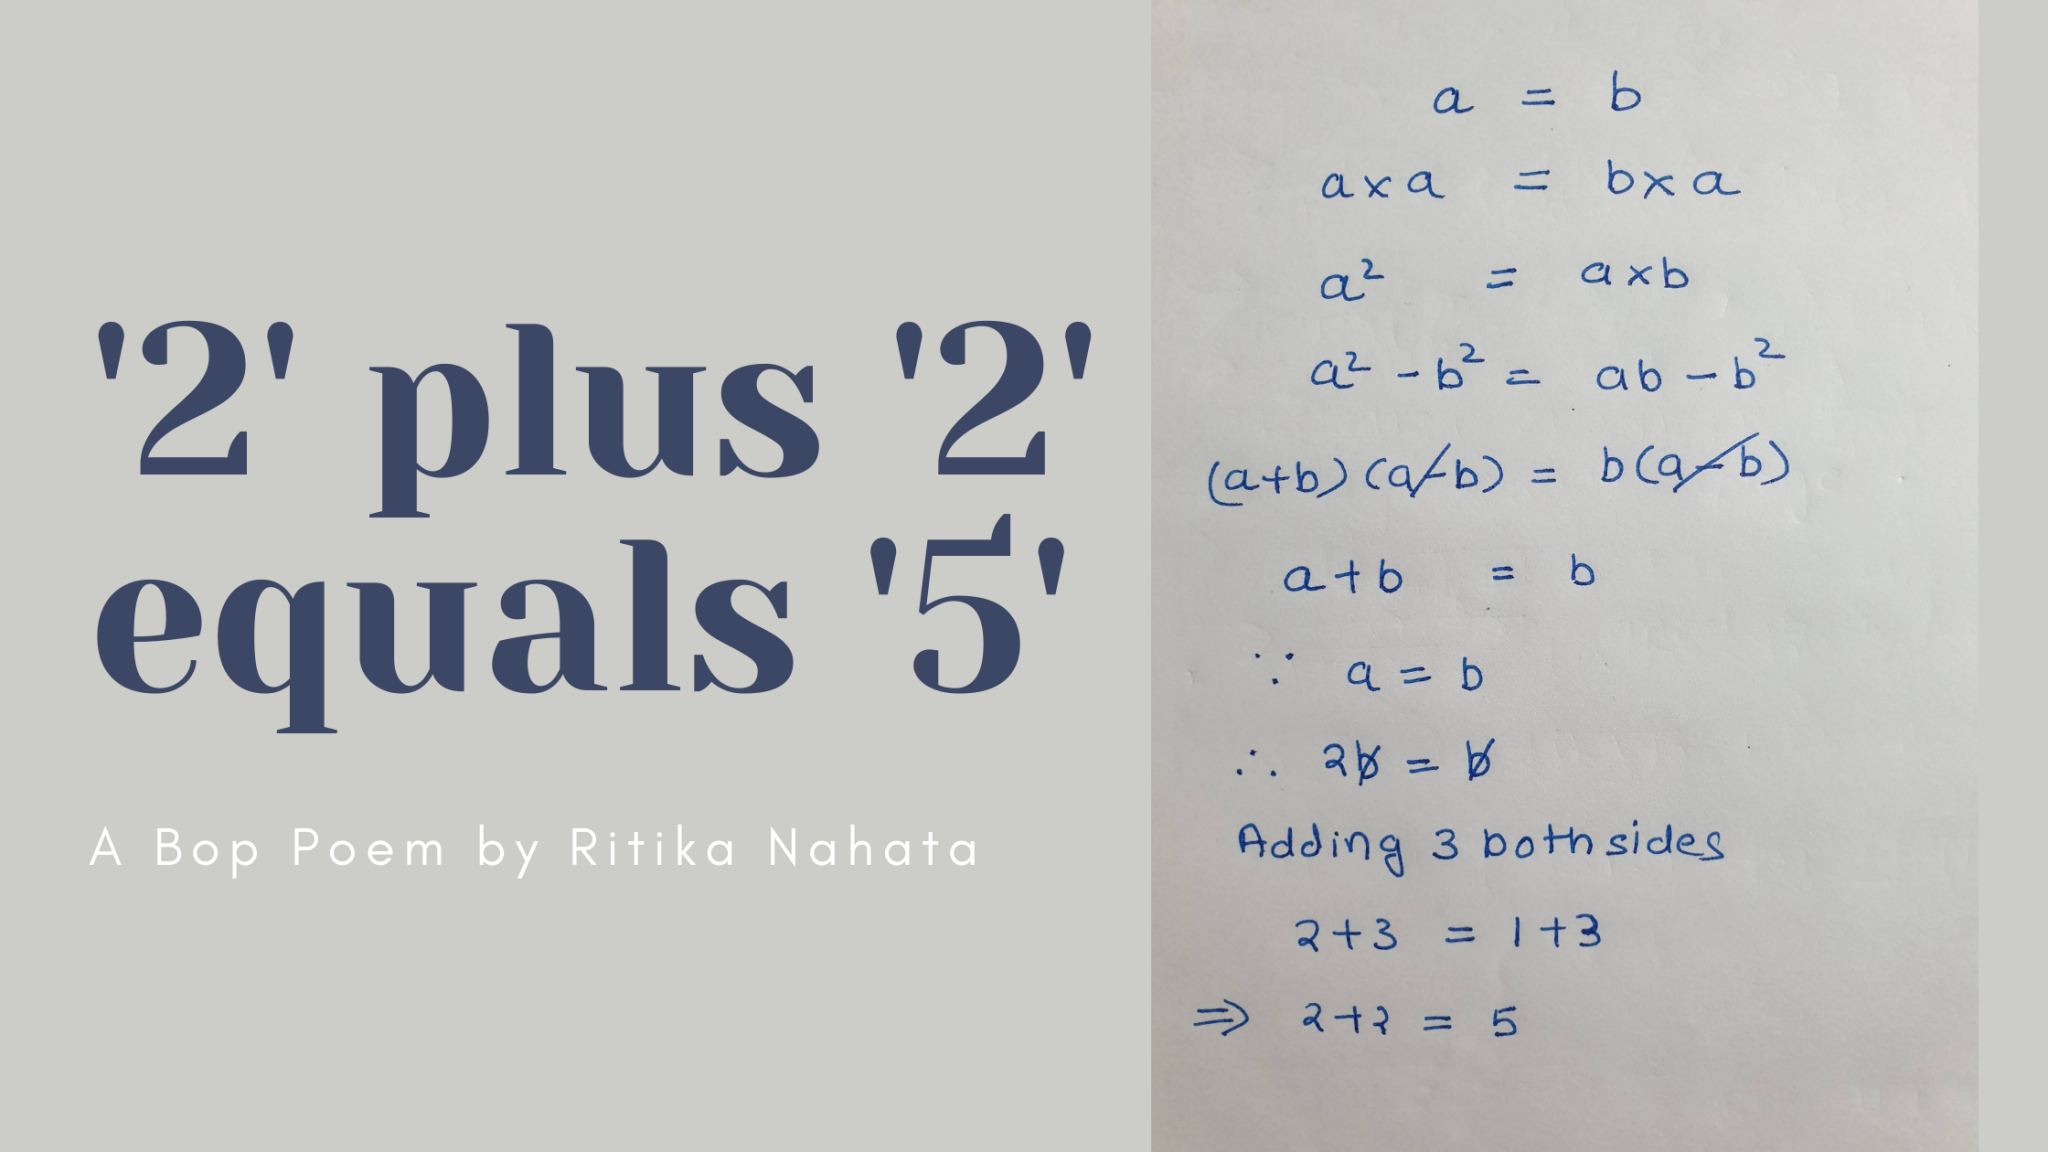 '2' plus '2' equals '5' | A Bop Poem by Ritika Nahata